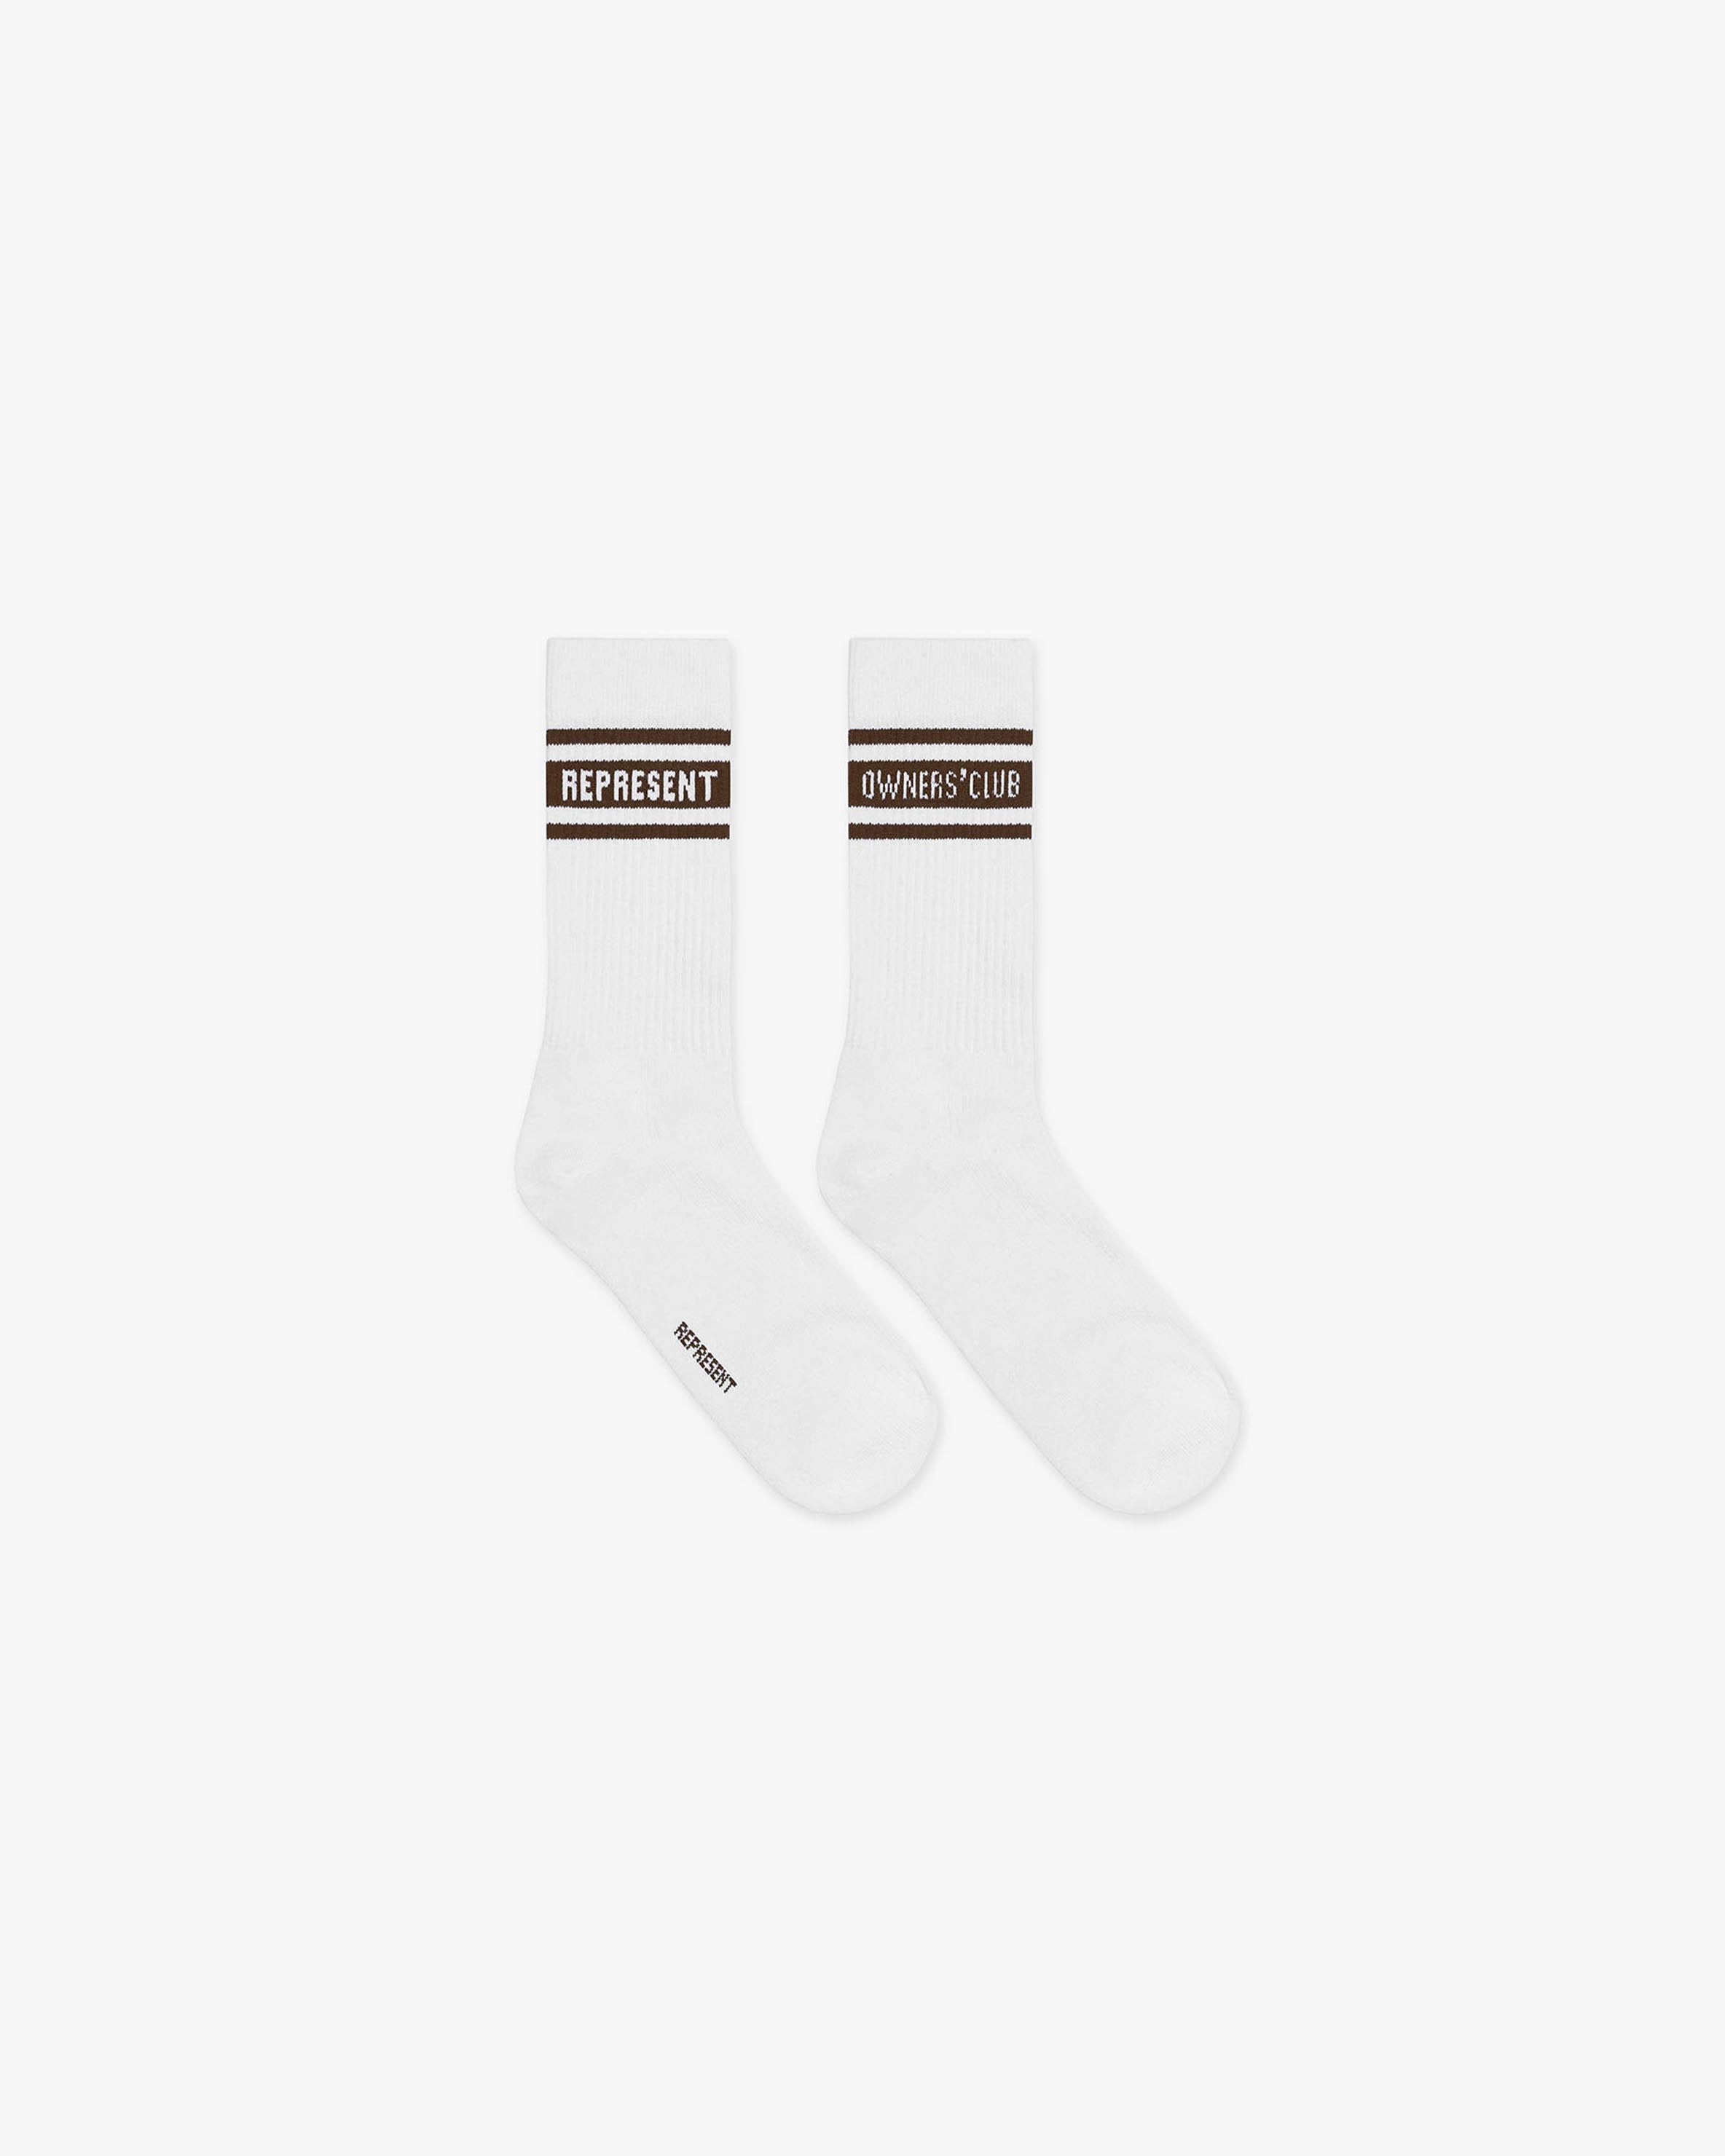 Represent Owners Club Socks - Flat White/Brown